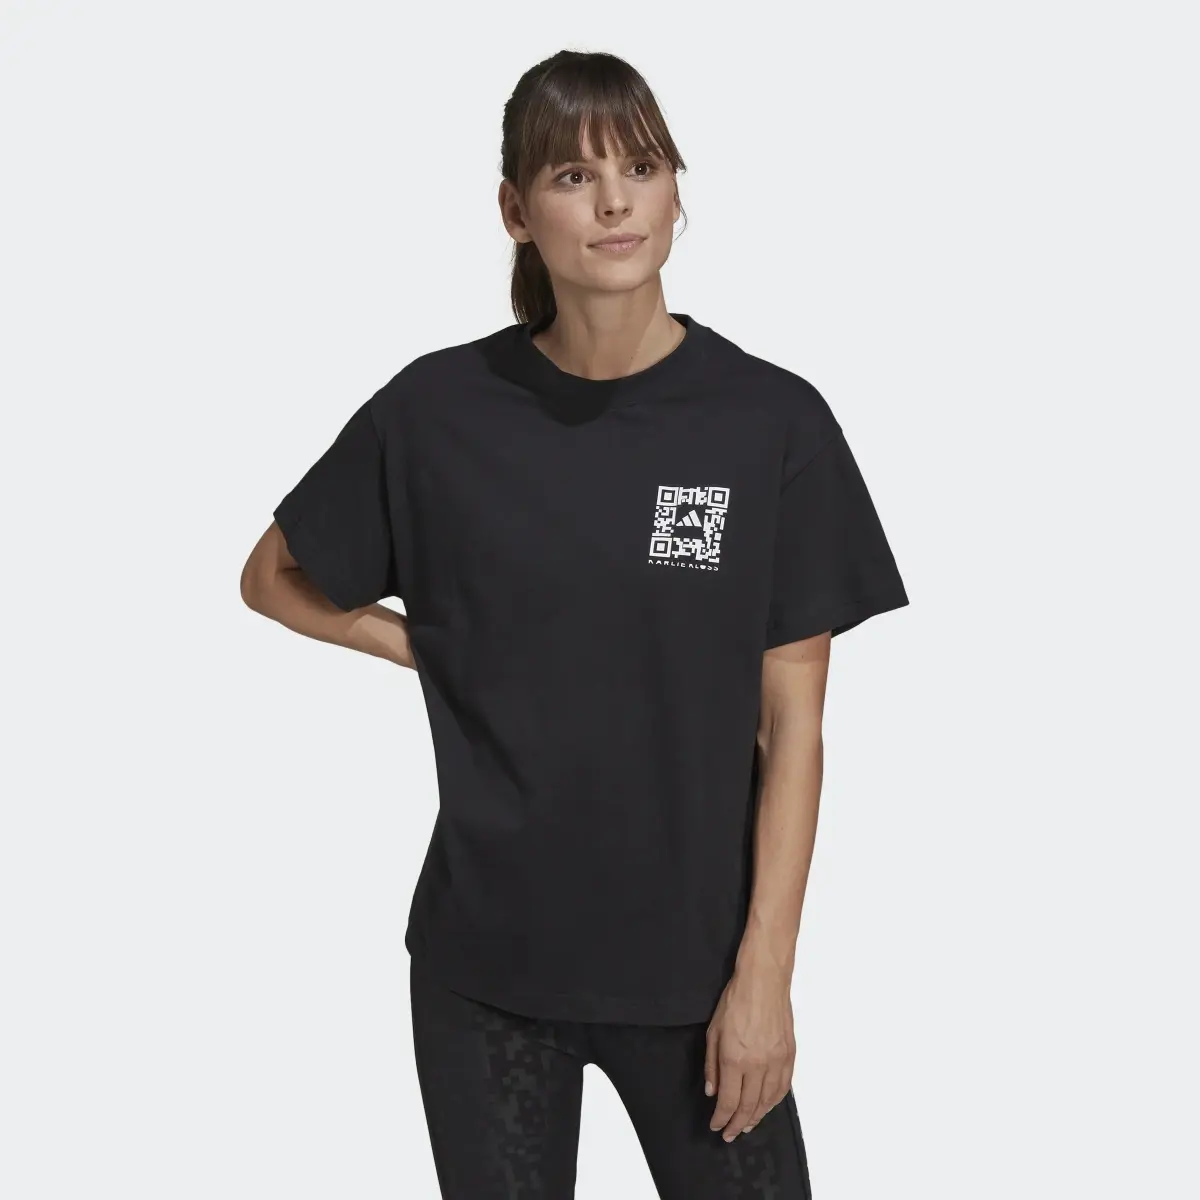 Adidas T-shirt Curta adidas x Karlie Kloss. 2